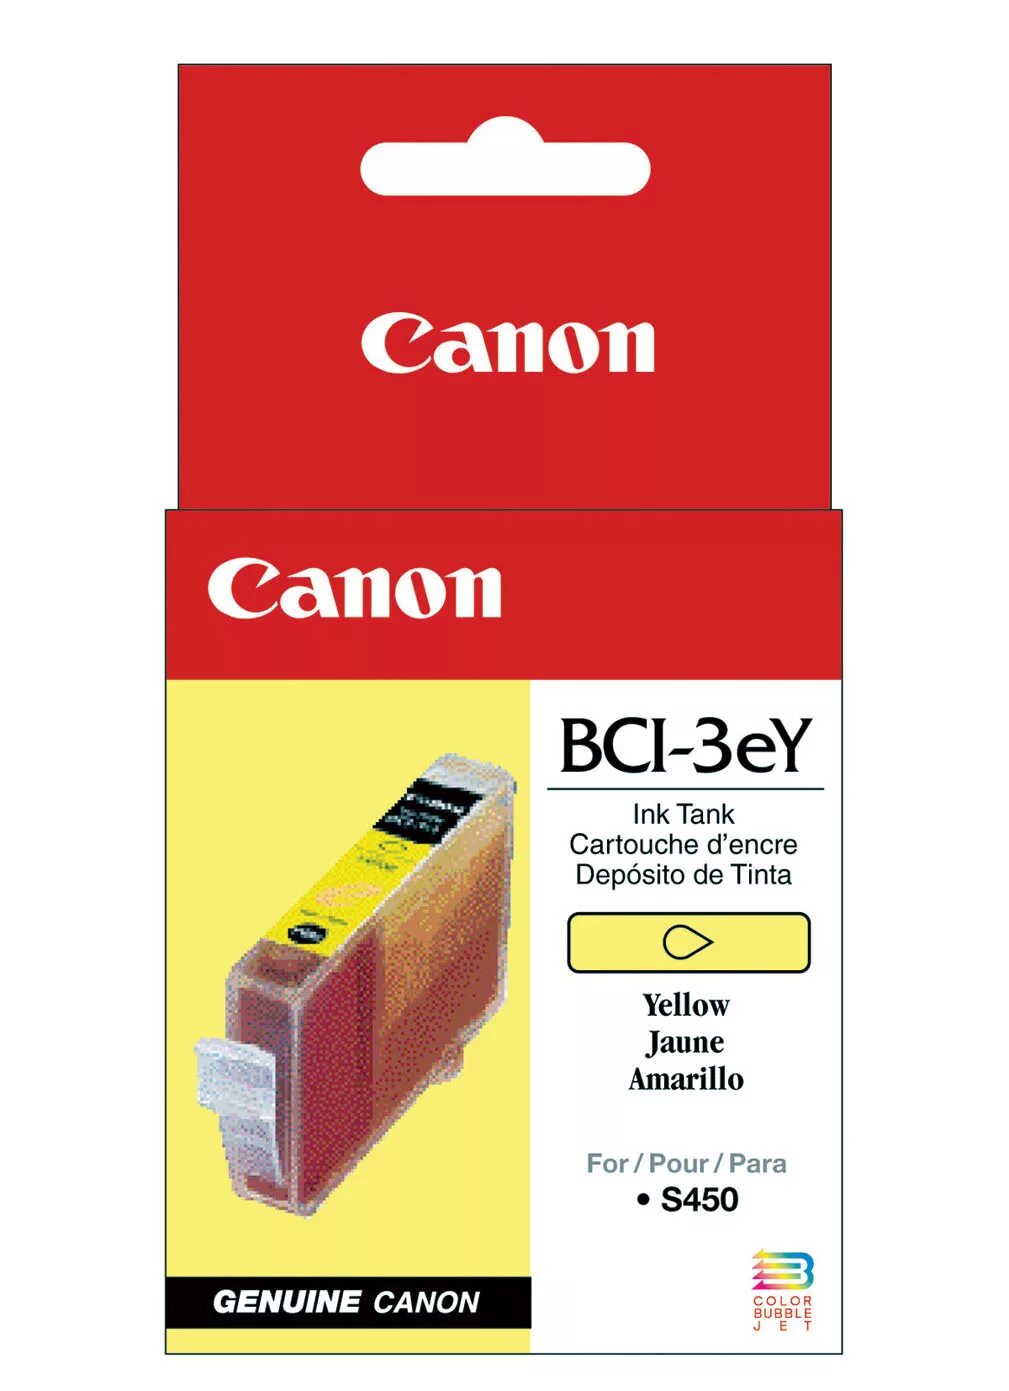 Canon BCI-6y Yellow. BCI-3ebk. Canon i560. Картридж для принтера Canon 6300. Желтые картриджи canon